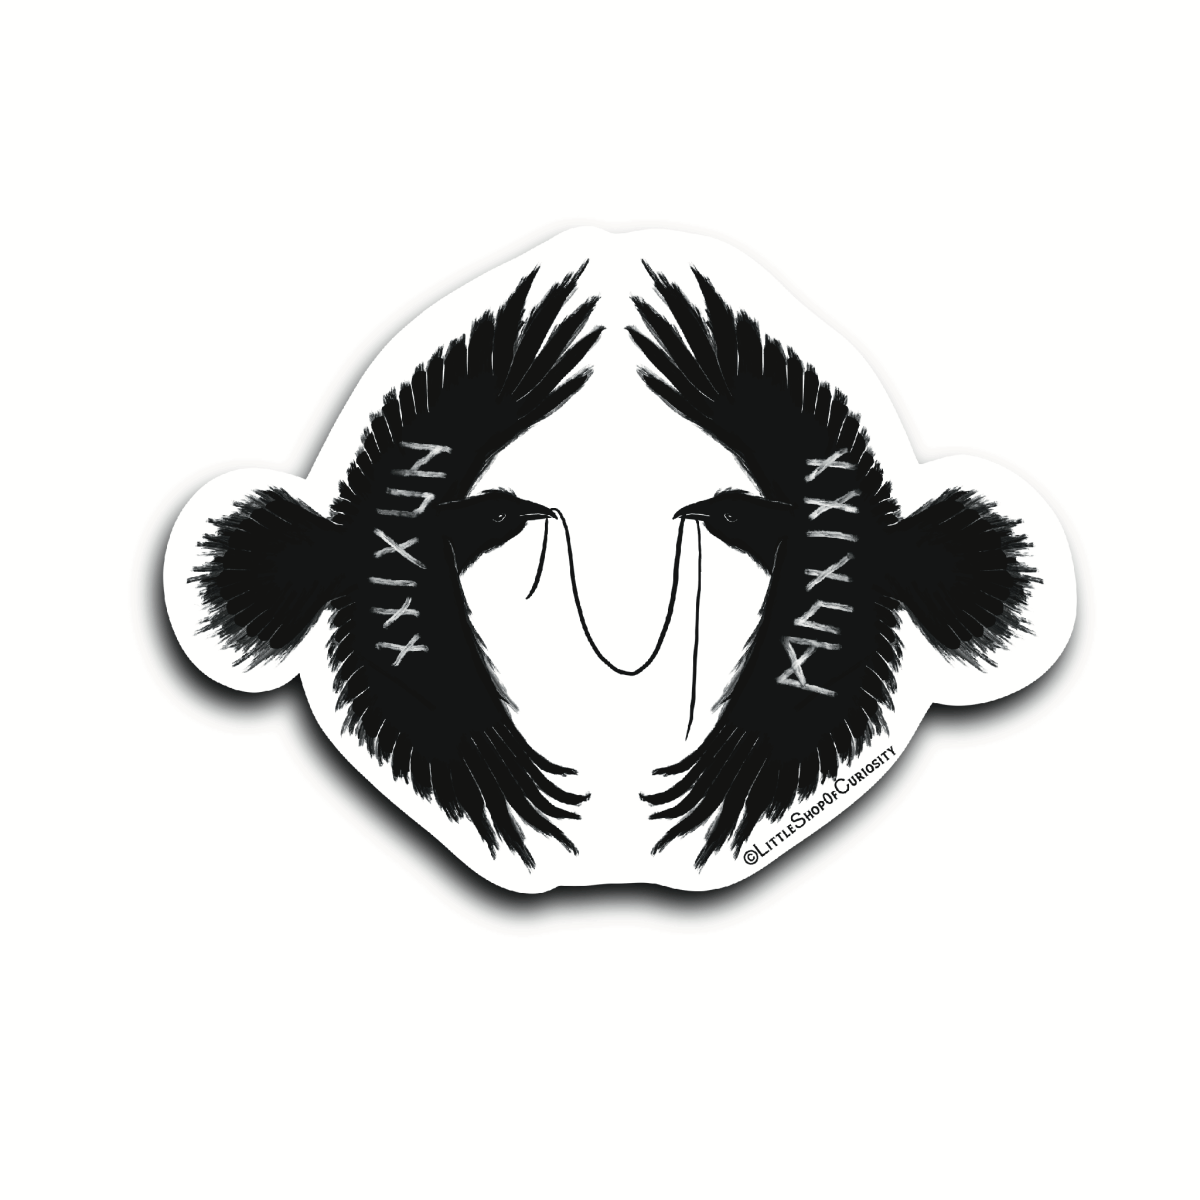 Huginn & Muninn Sticker - Black & White Sticker - Little Shop of Curiosity